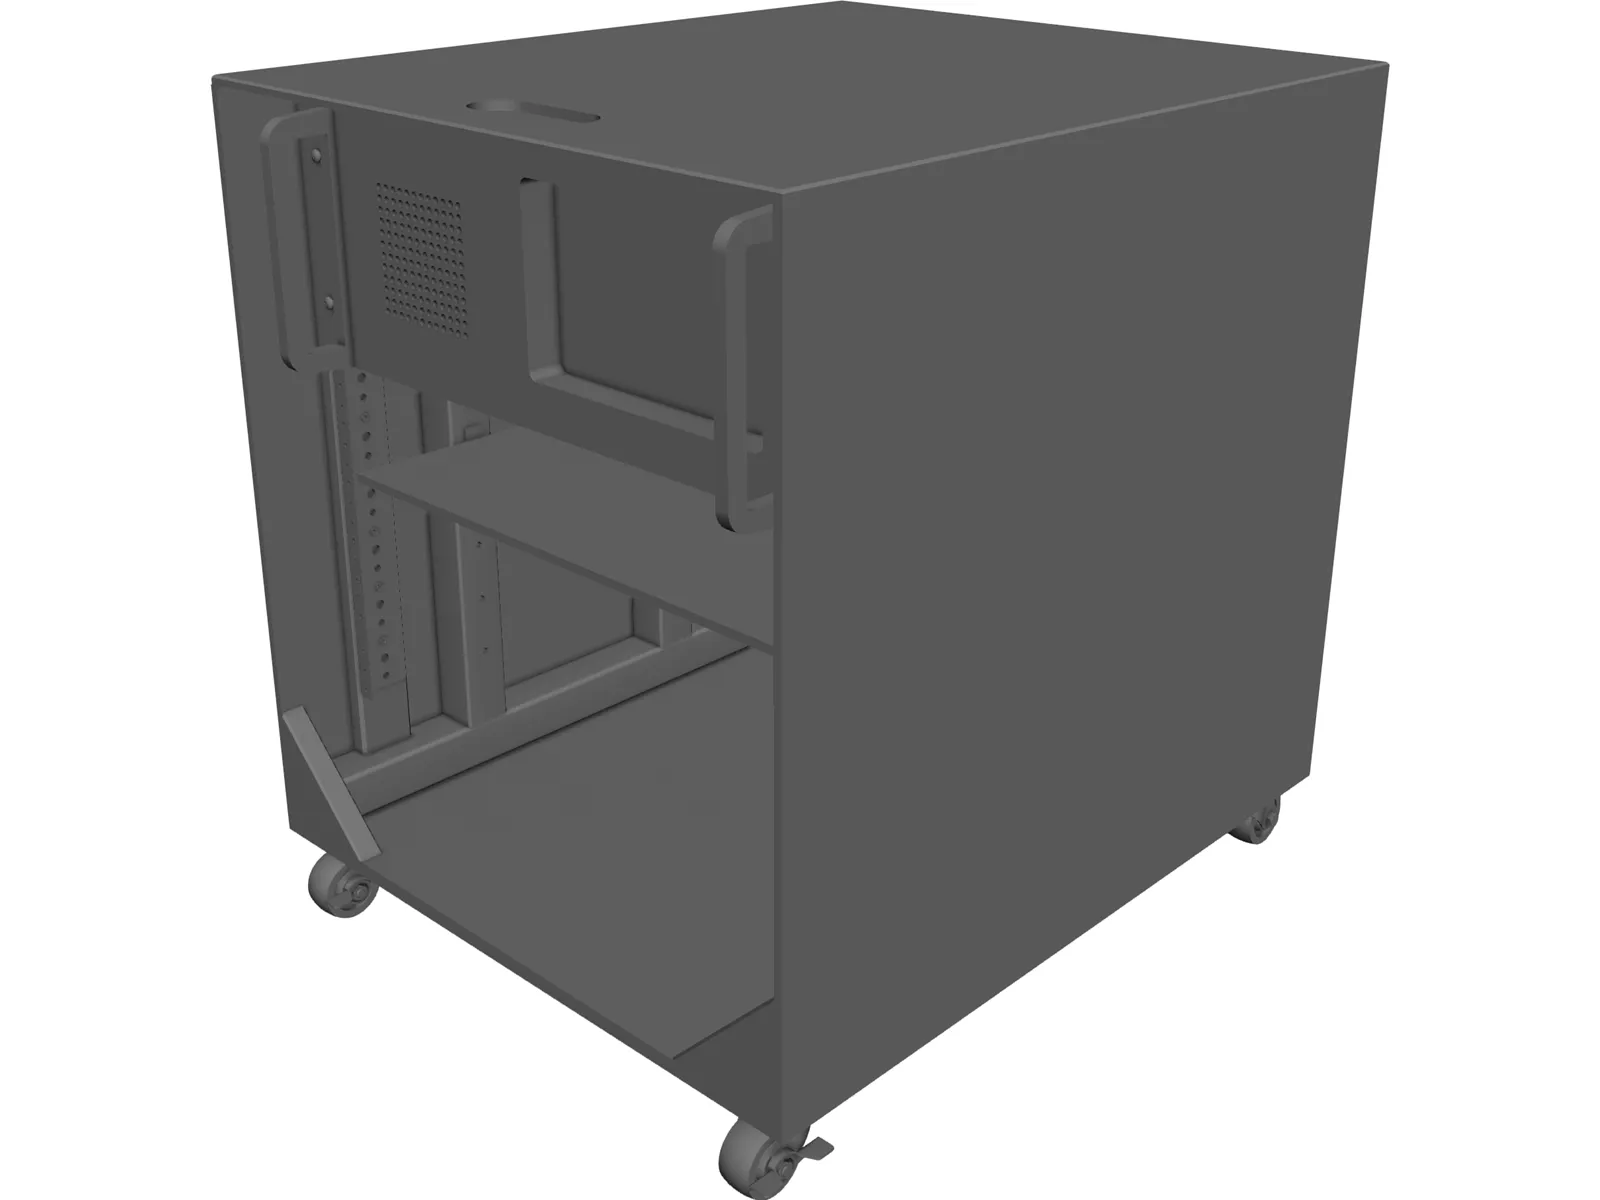 Audio/Server Rack with 4U Instrument 19-inch 3D Model